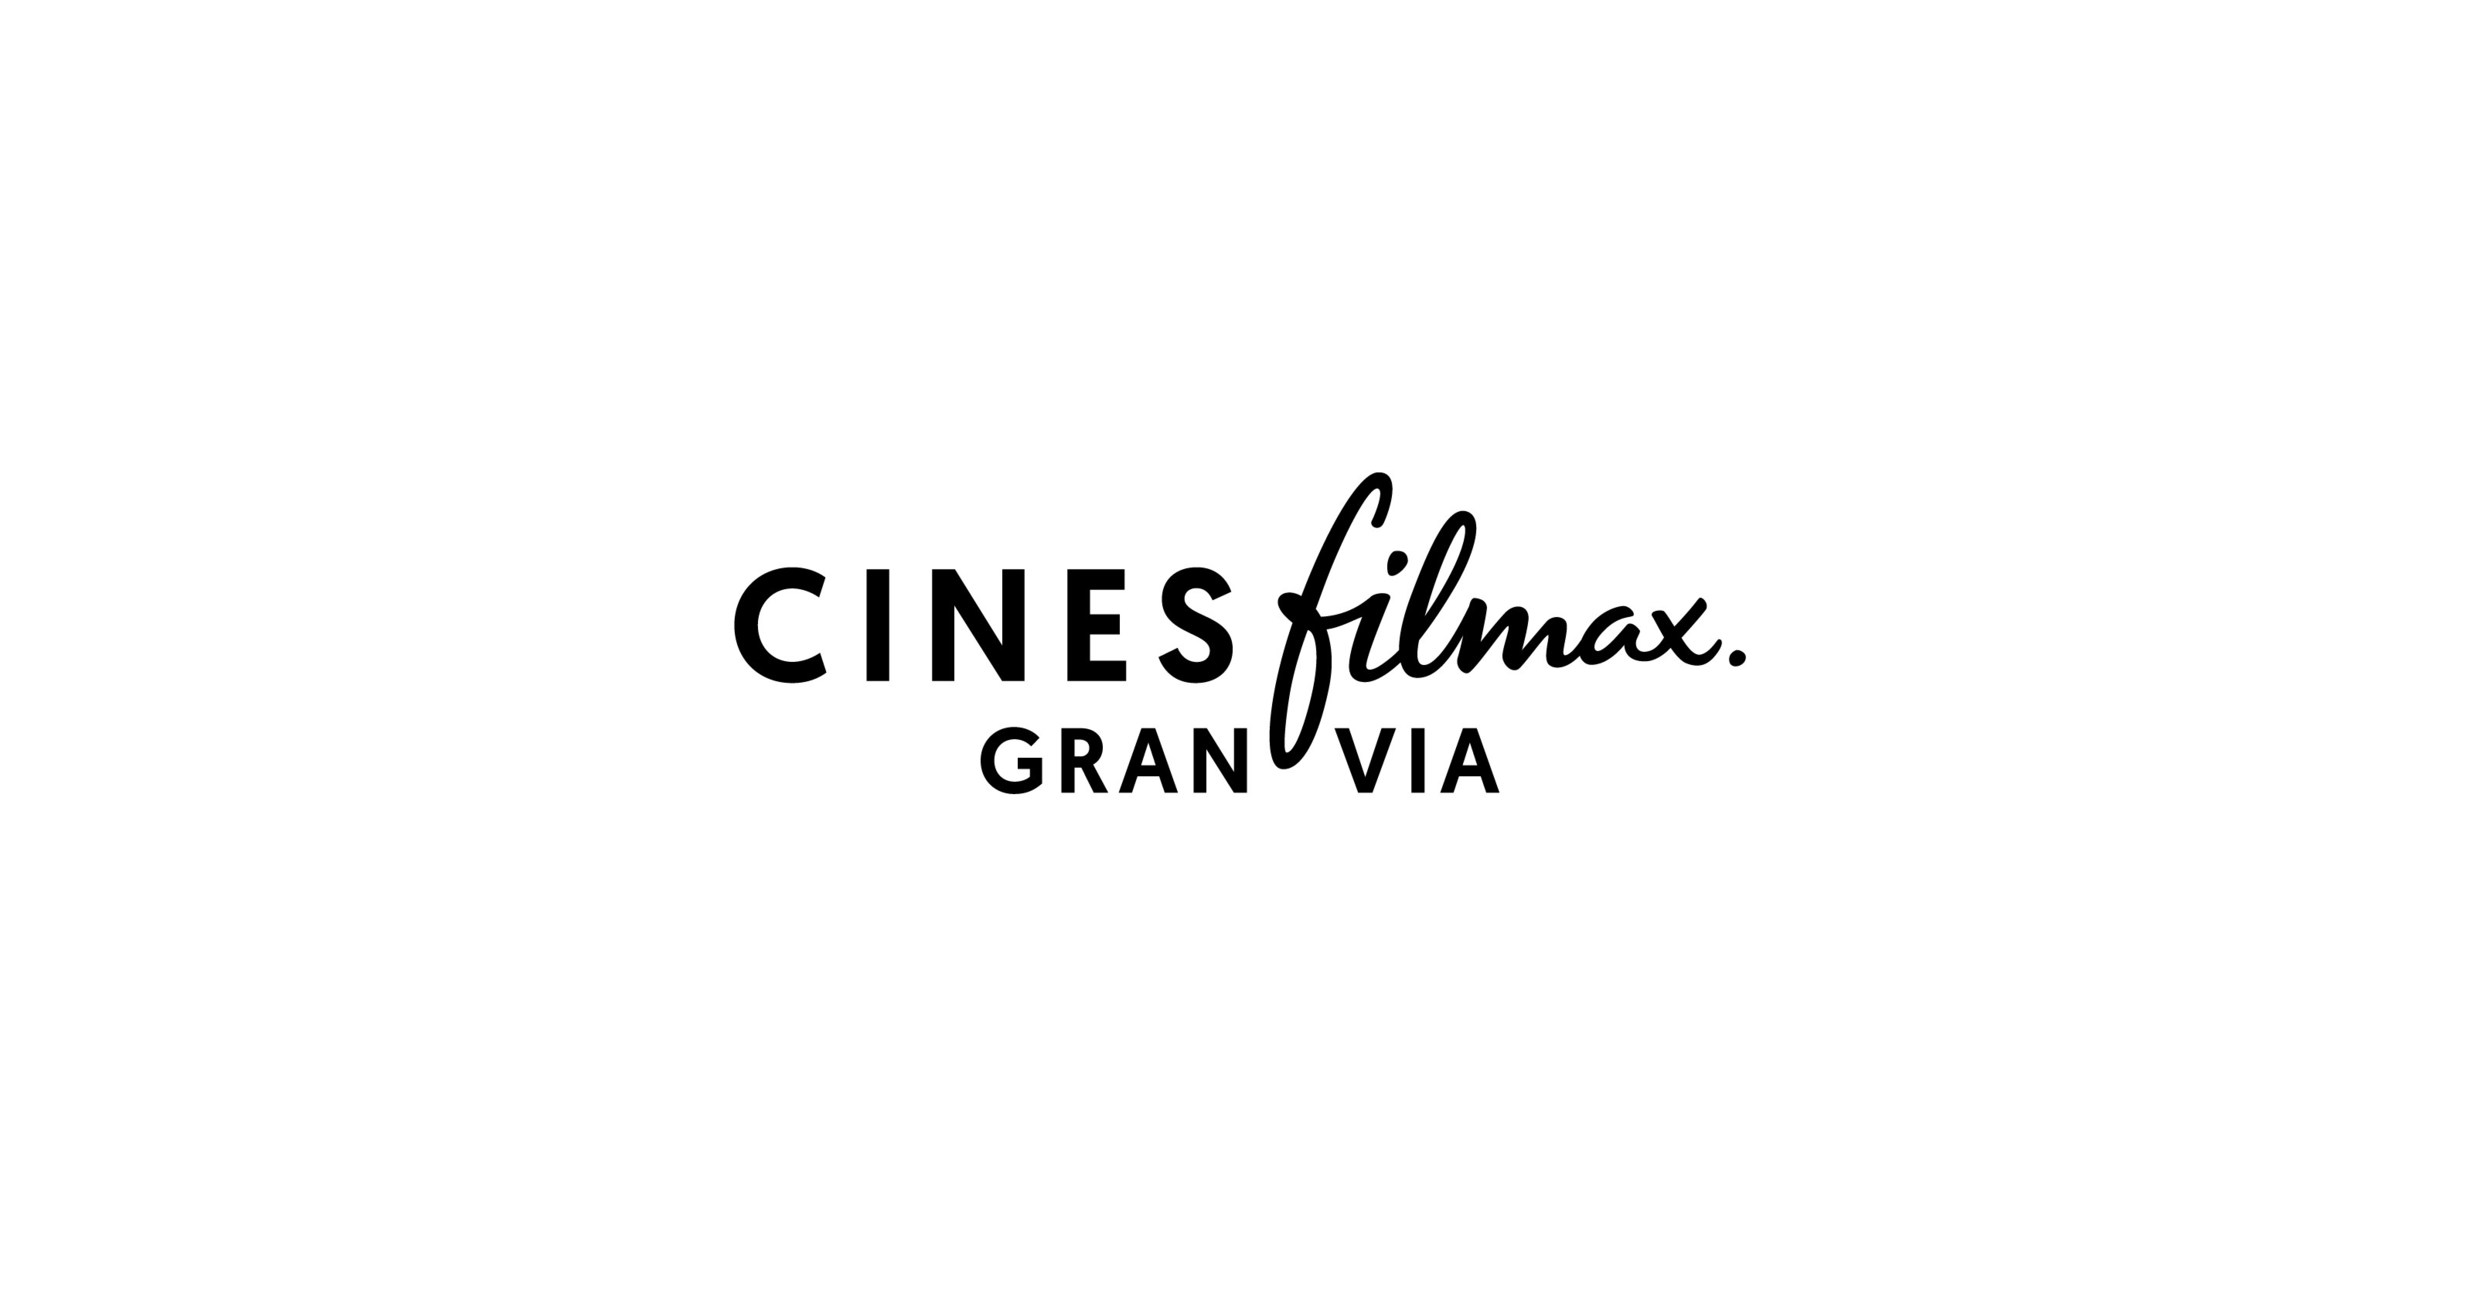 CJ 4DPLEX, Cines Filmax Adds 4DX Auditorium to Gran Via Location